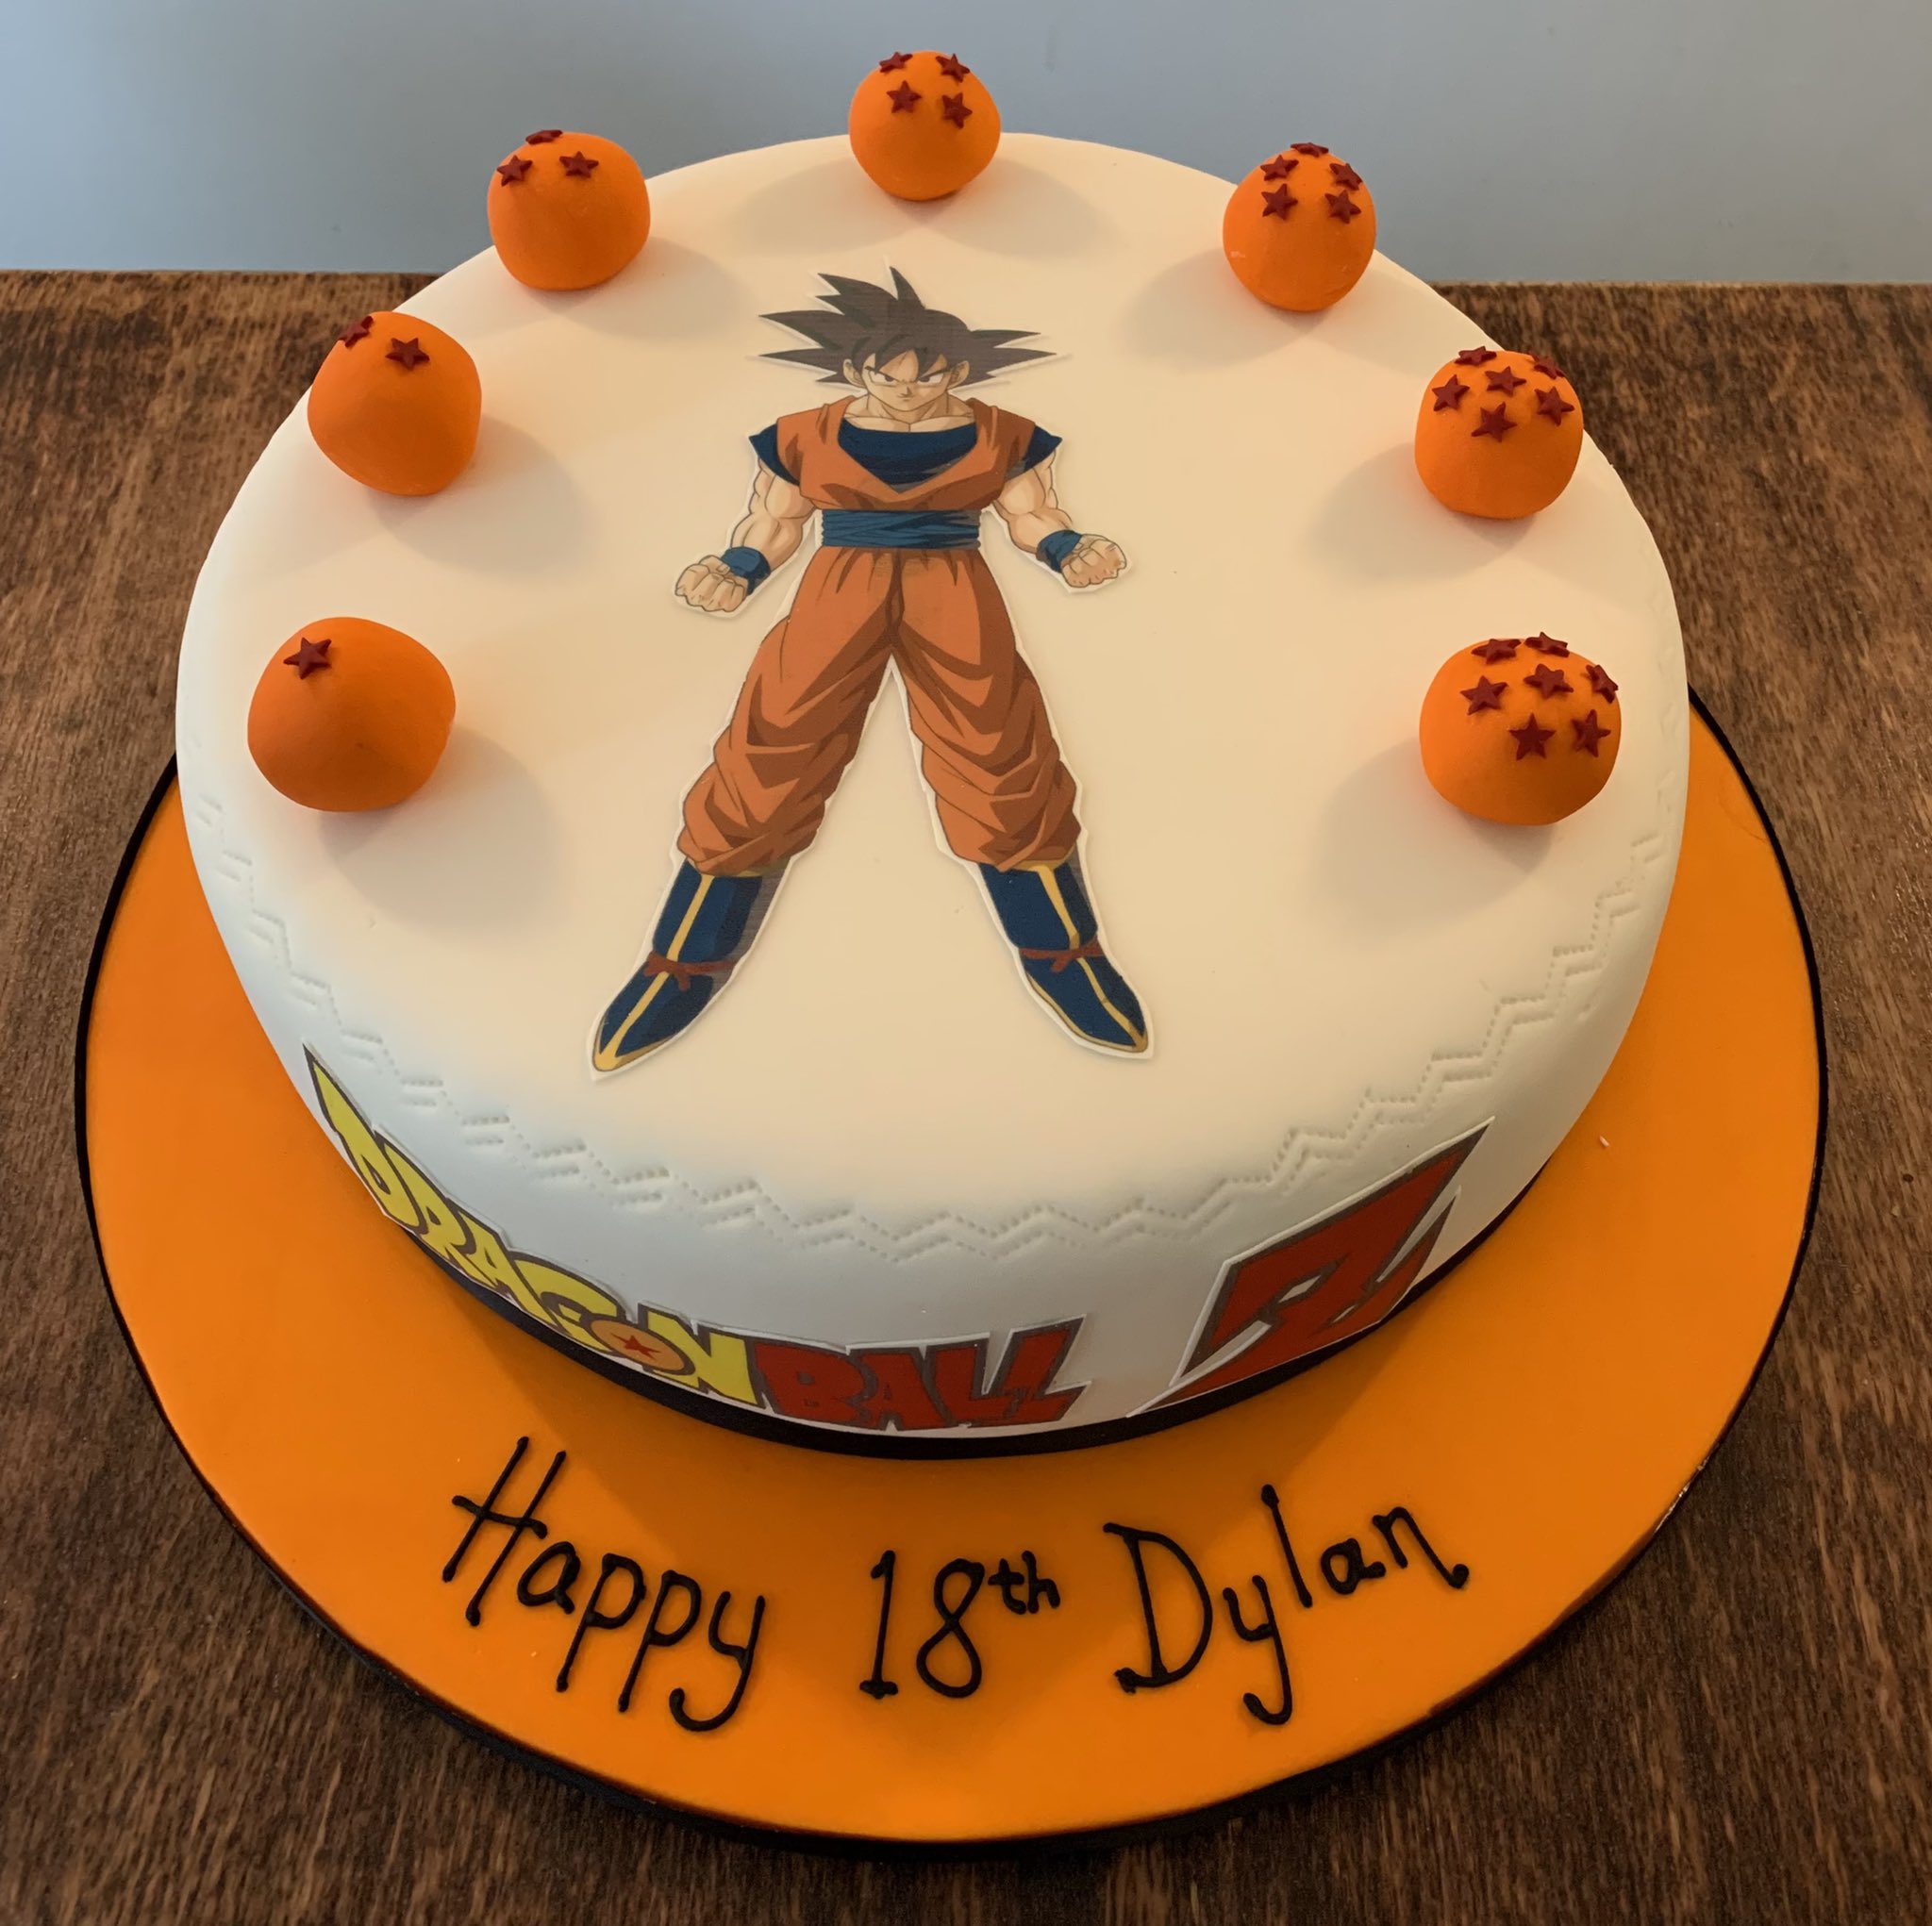 Coolest DIY Birthday Cakes | Anime and Manga Cakes